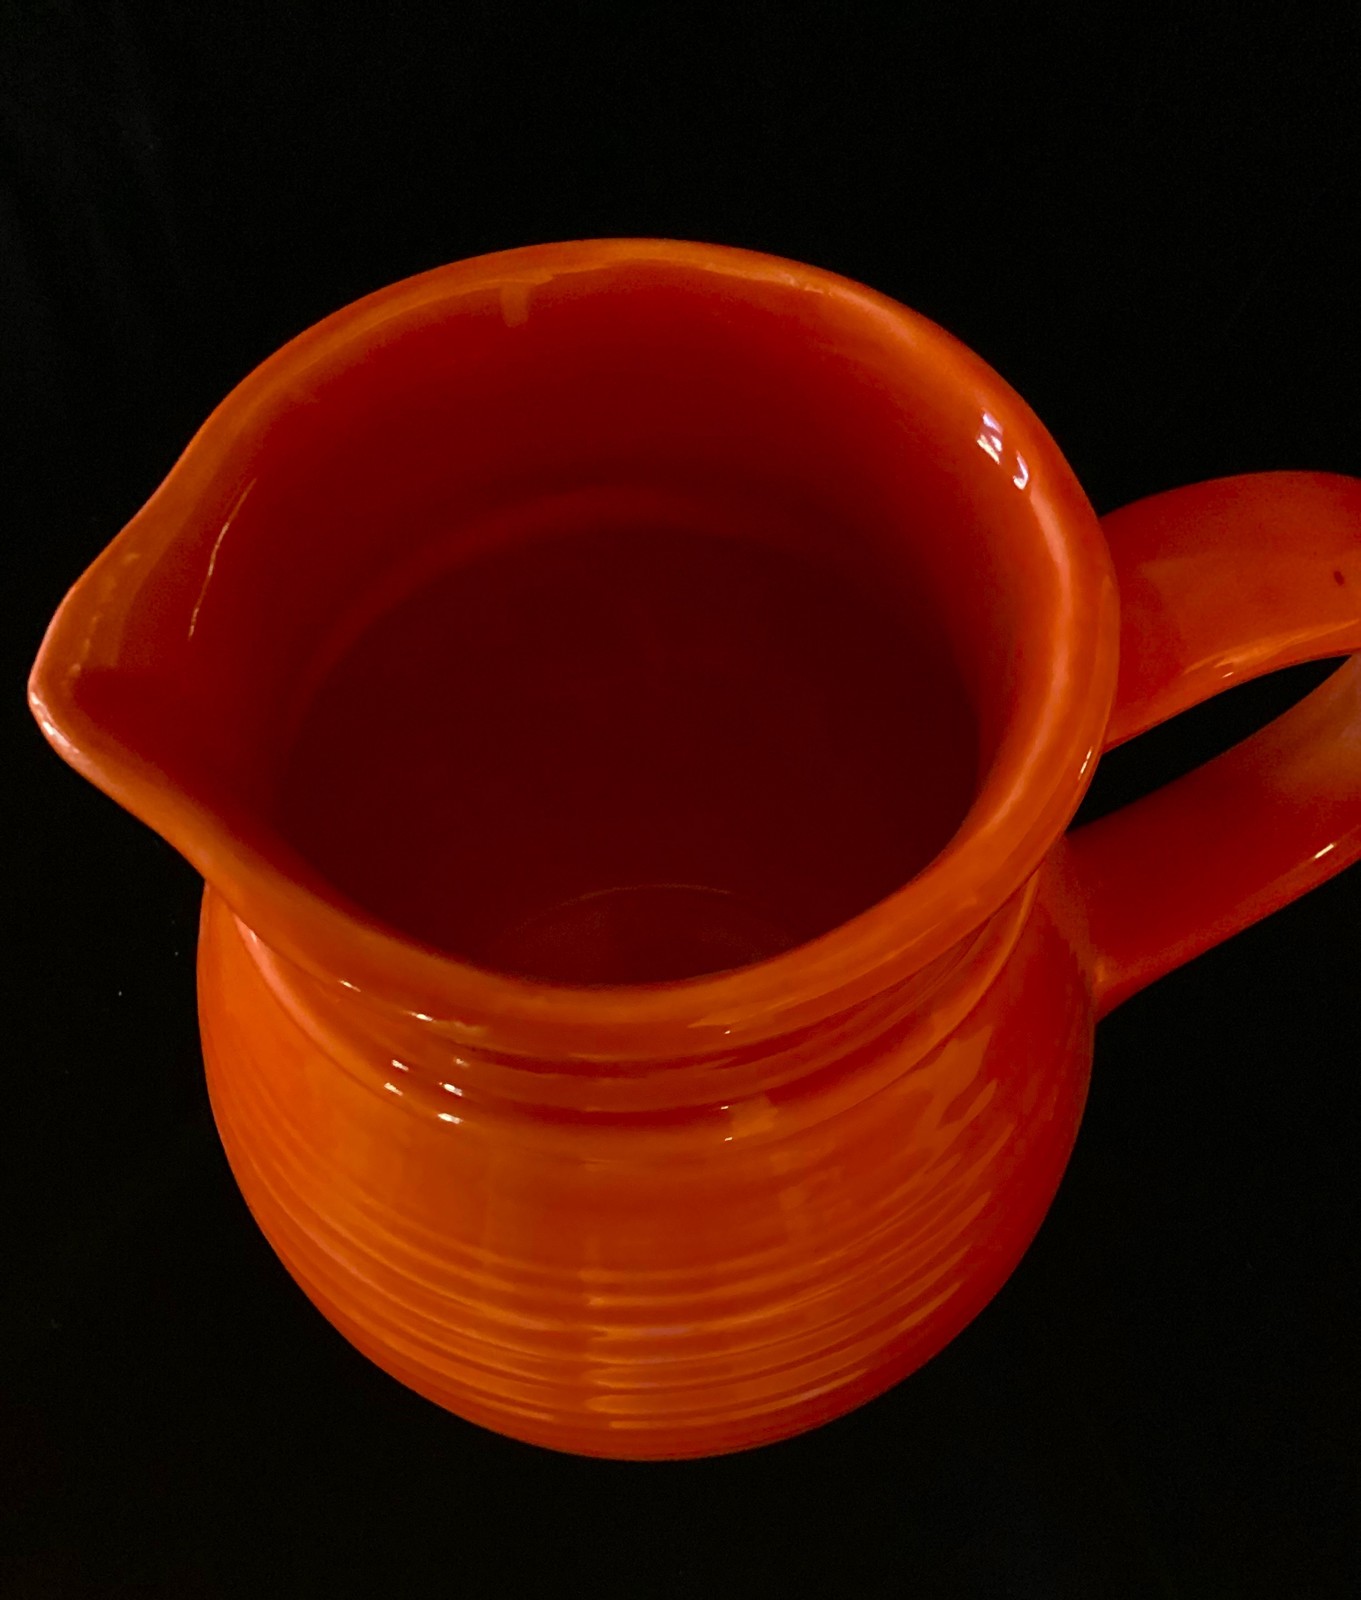 50% off Bj325 Vintage Treasure Craft Pitcher	Orange Pitcher Ceramic Glazed - $45.00